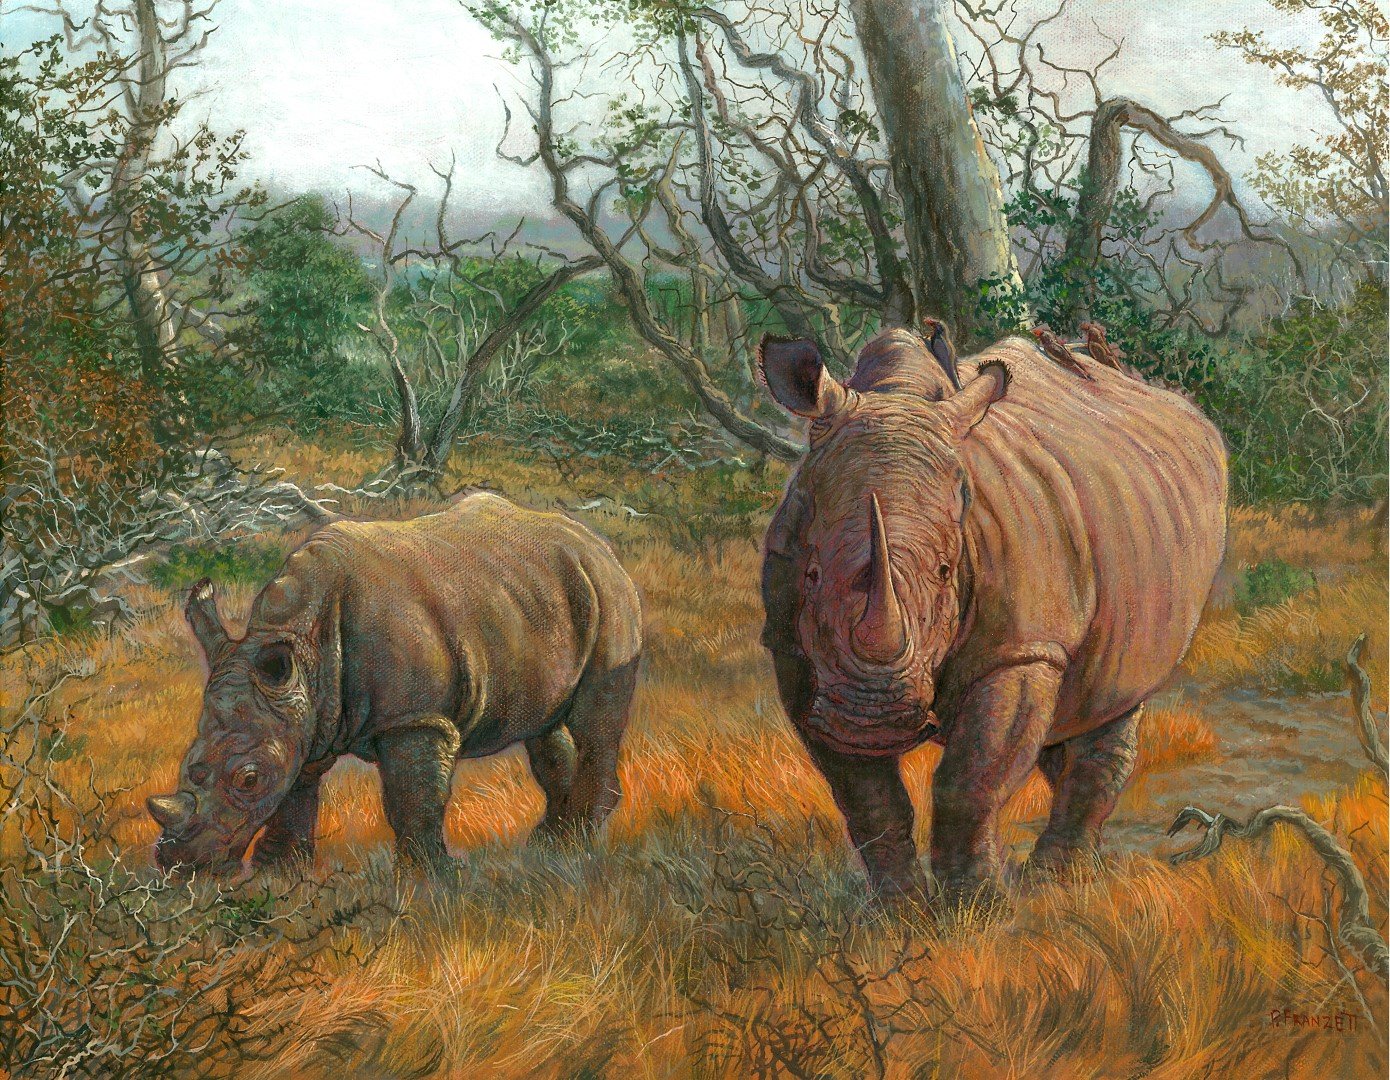 White Rhinos - South Africa (Joes Edit) (Large).jpg